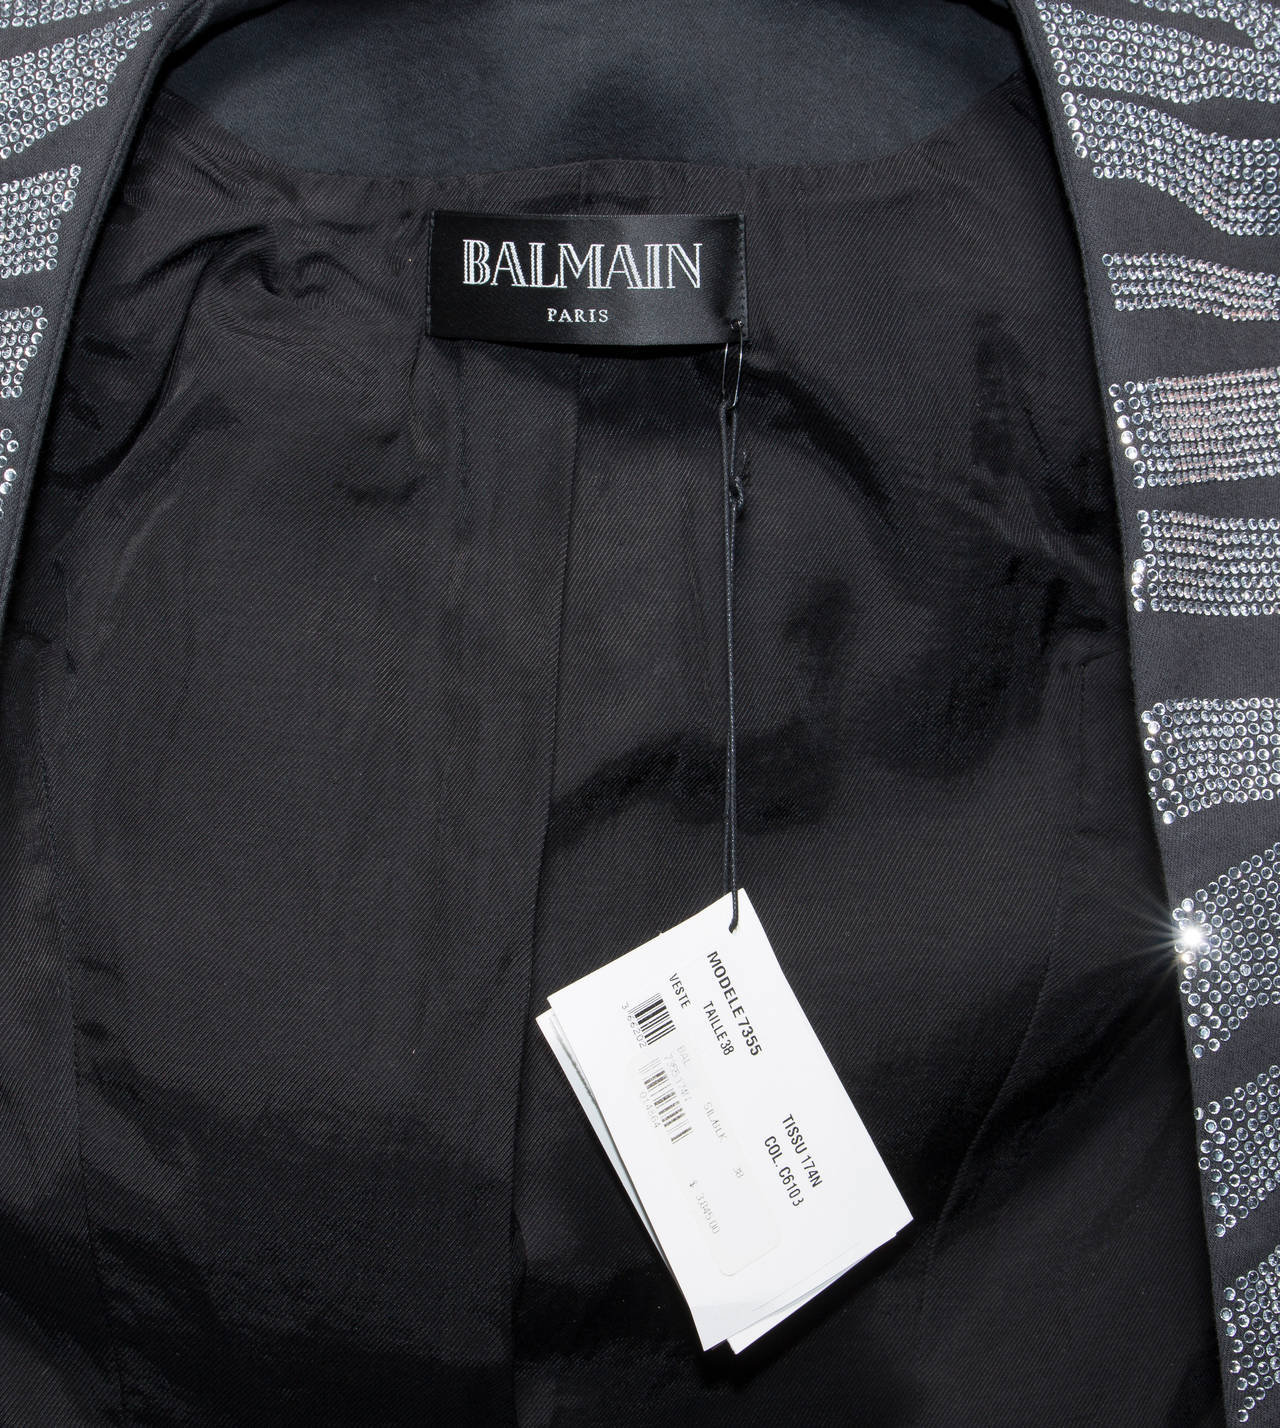 Balmain Crystal Embellished Zebra Print Jacket, Pre-Fall 2014 2